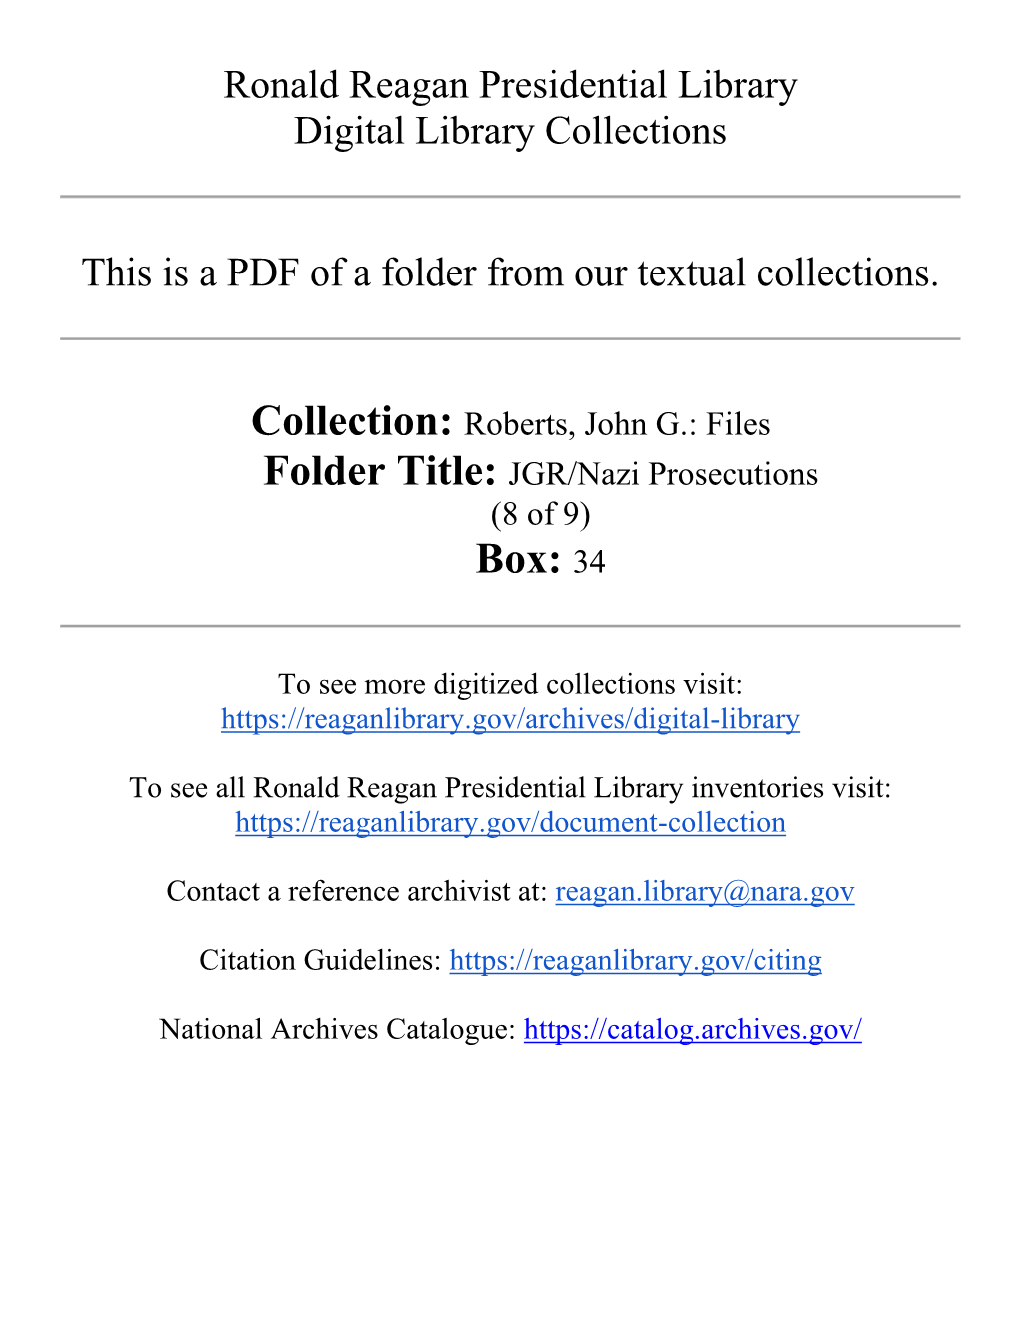 Collection: Roberts, John G.: Files Folder Title: JGR/Nazi Prosecutions (8 of 9) Box: 34